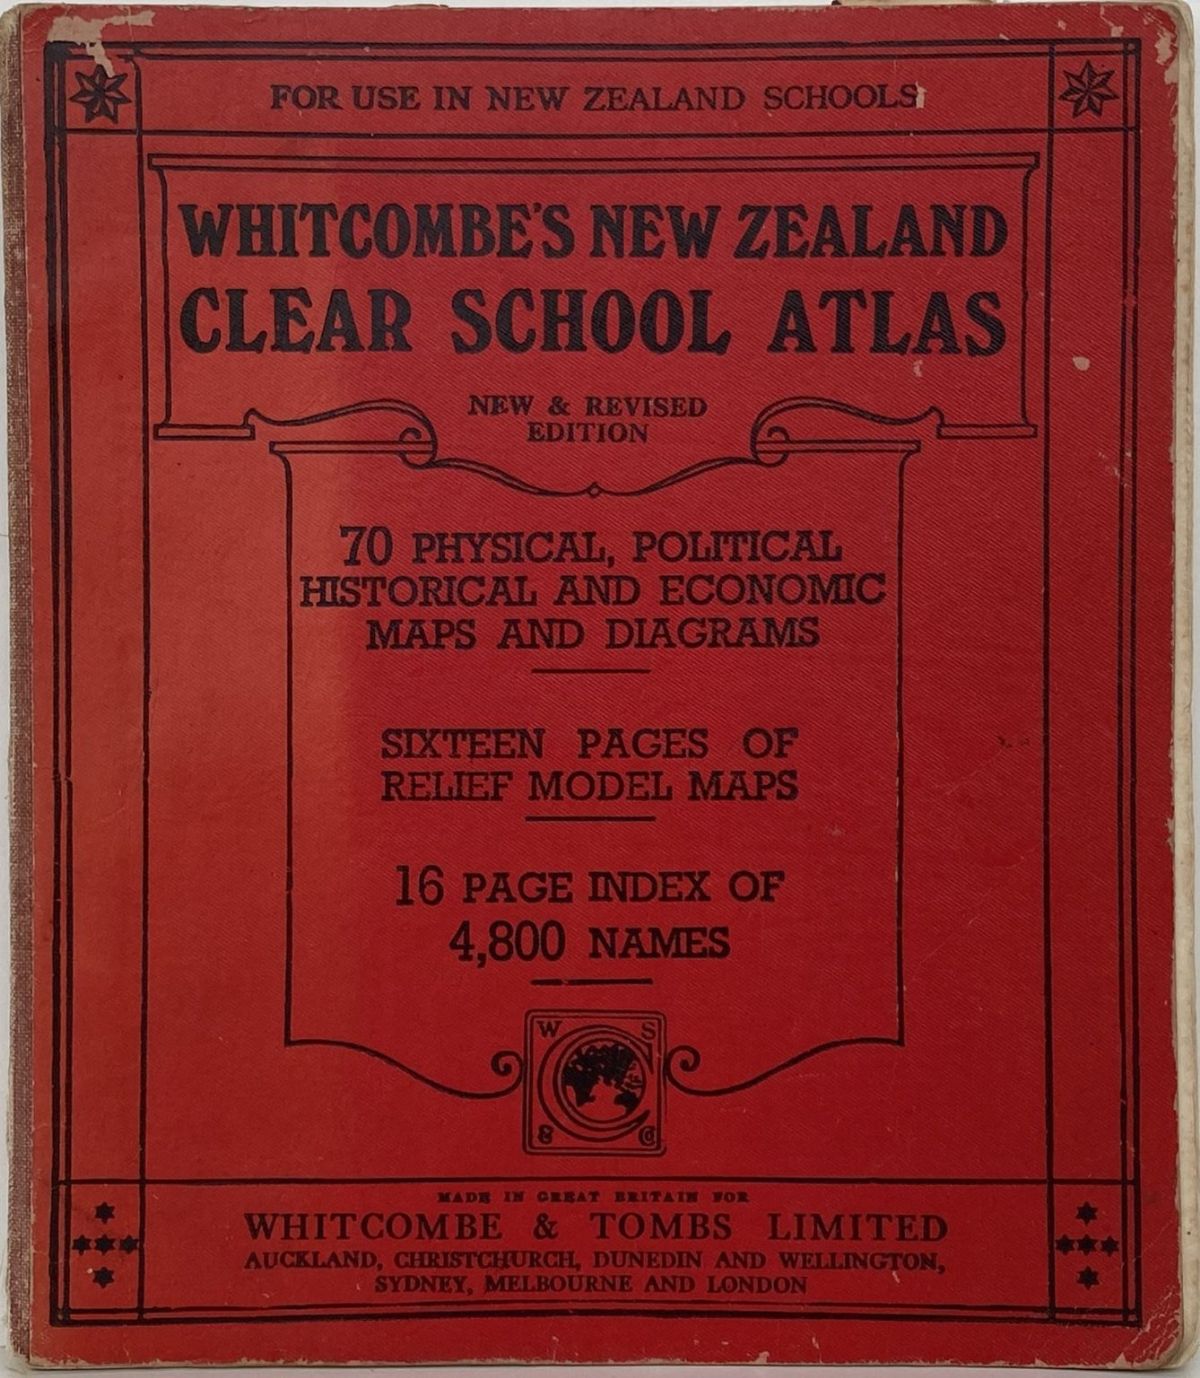 Whitcombe's New Zealand Clear School Atlas